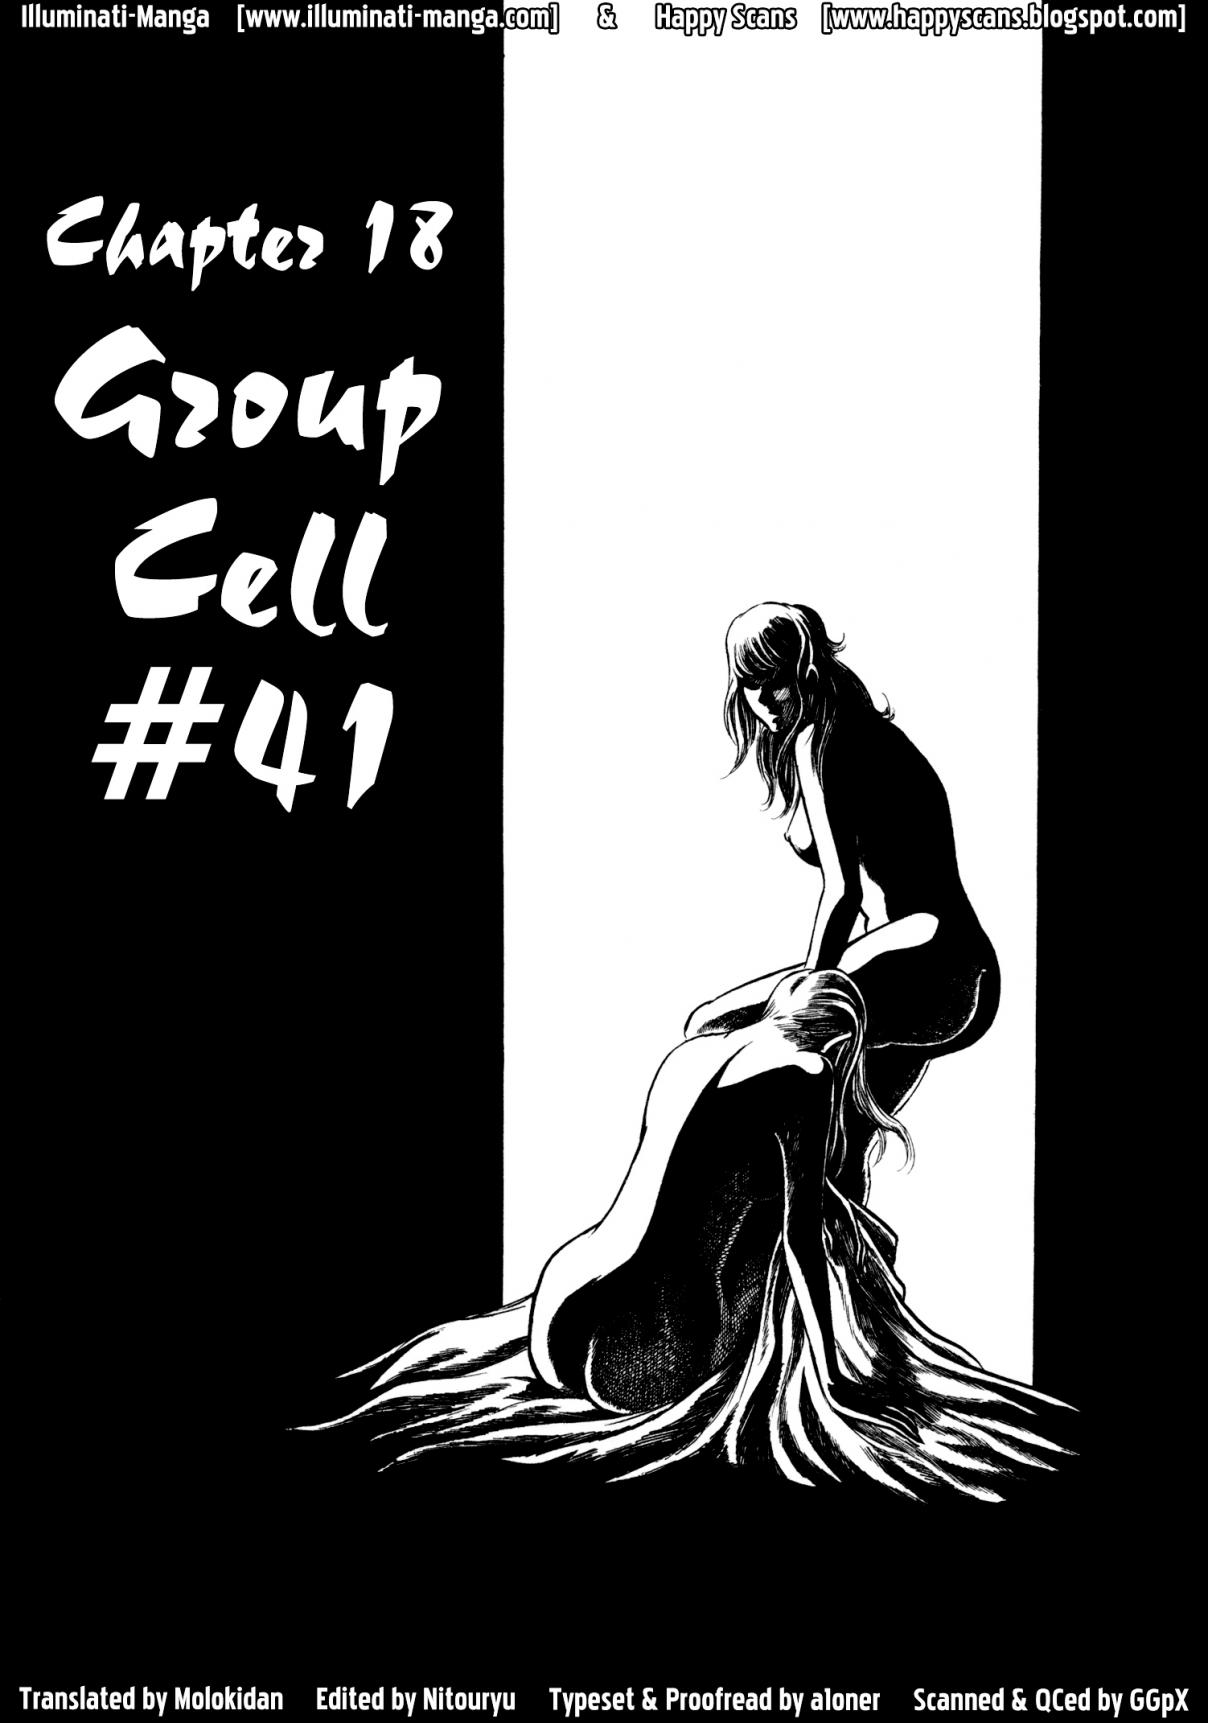 Sasori Vol. 2 Ch. 18 Group Cell #41